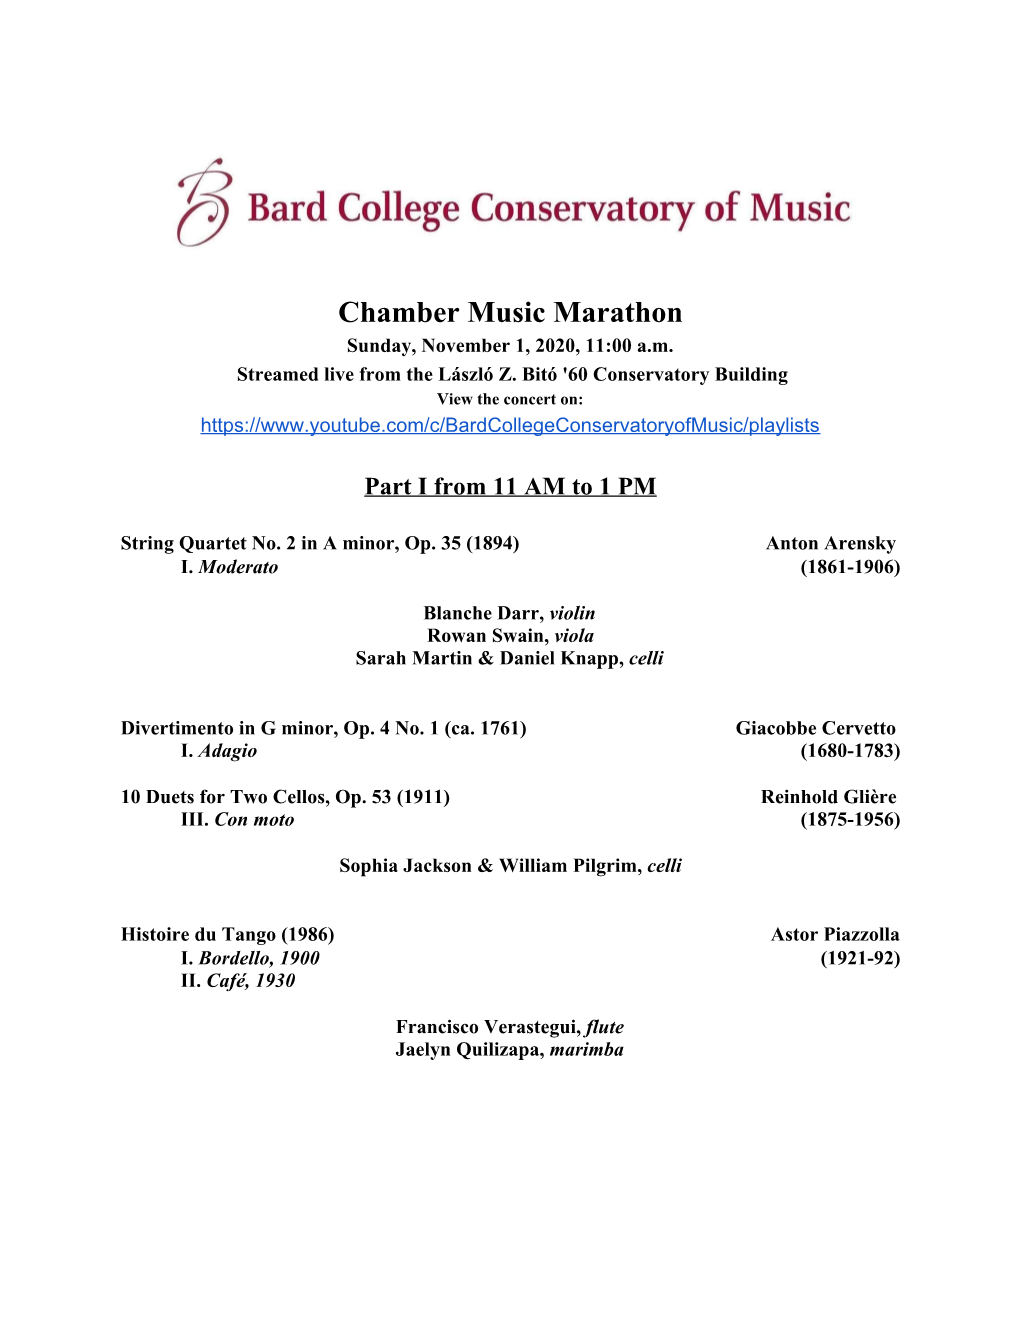 Chamber Music Marathon Sunday, November 1, 2020, 11:00 A.M